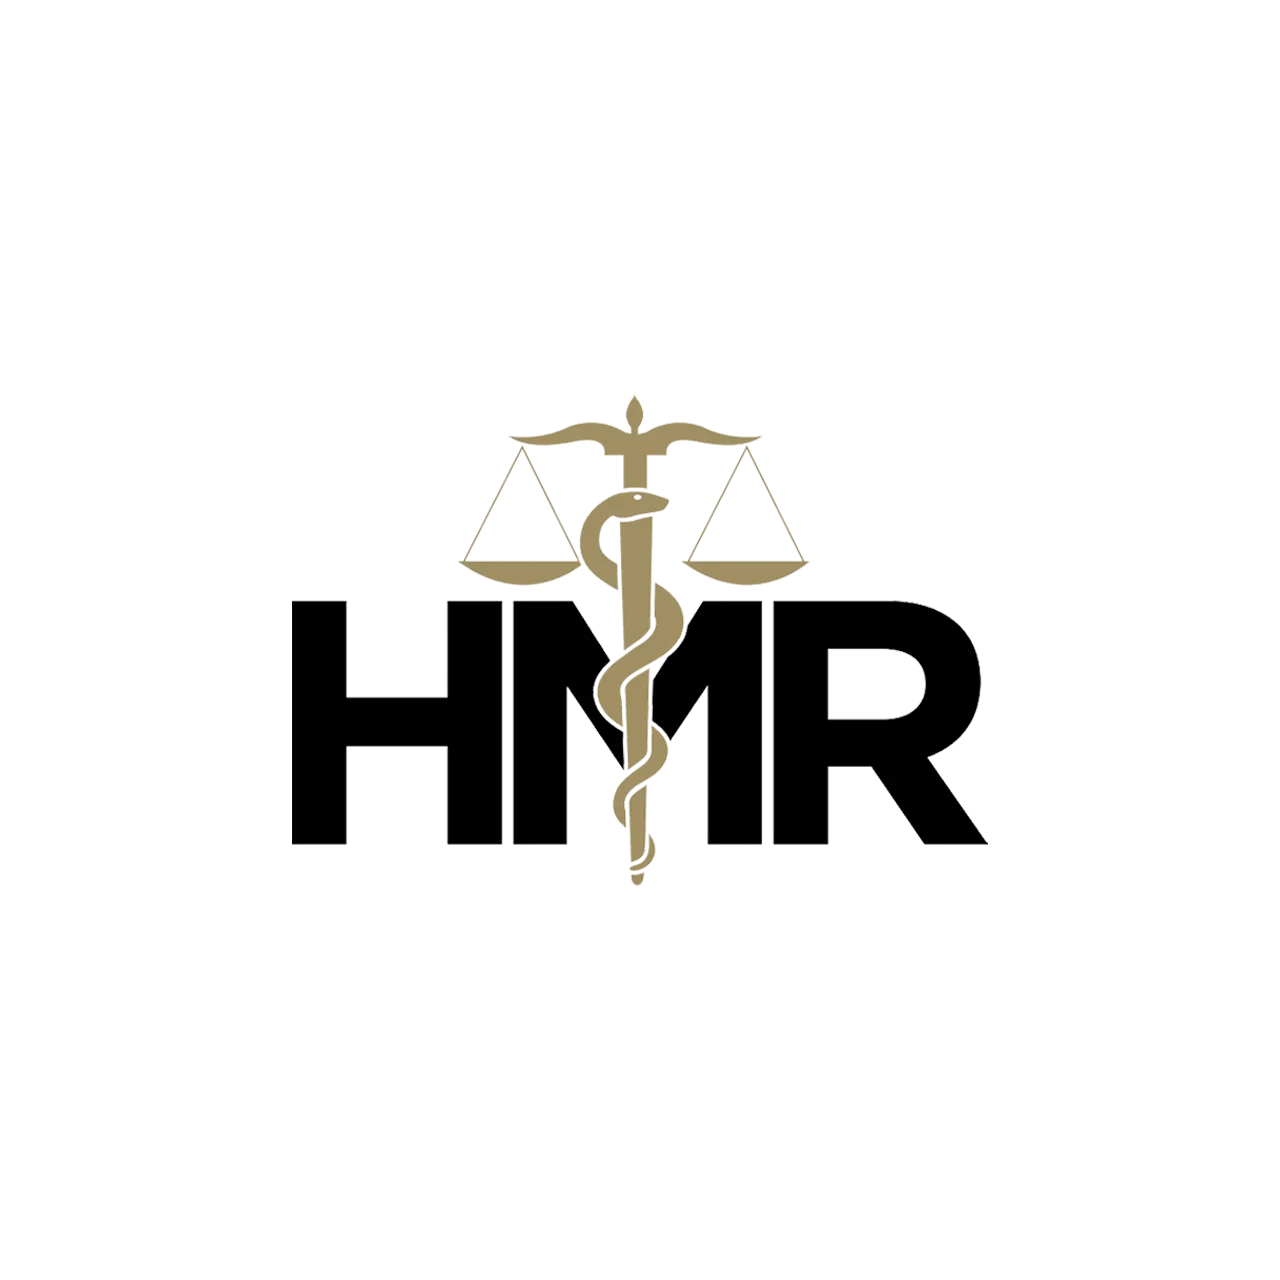 HMR Logo